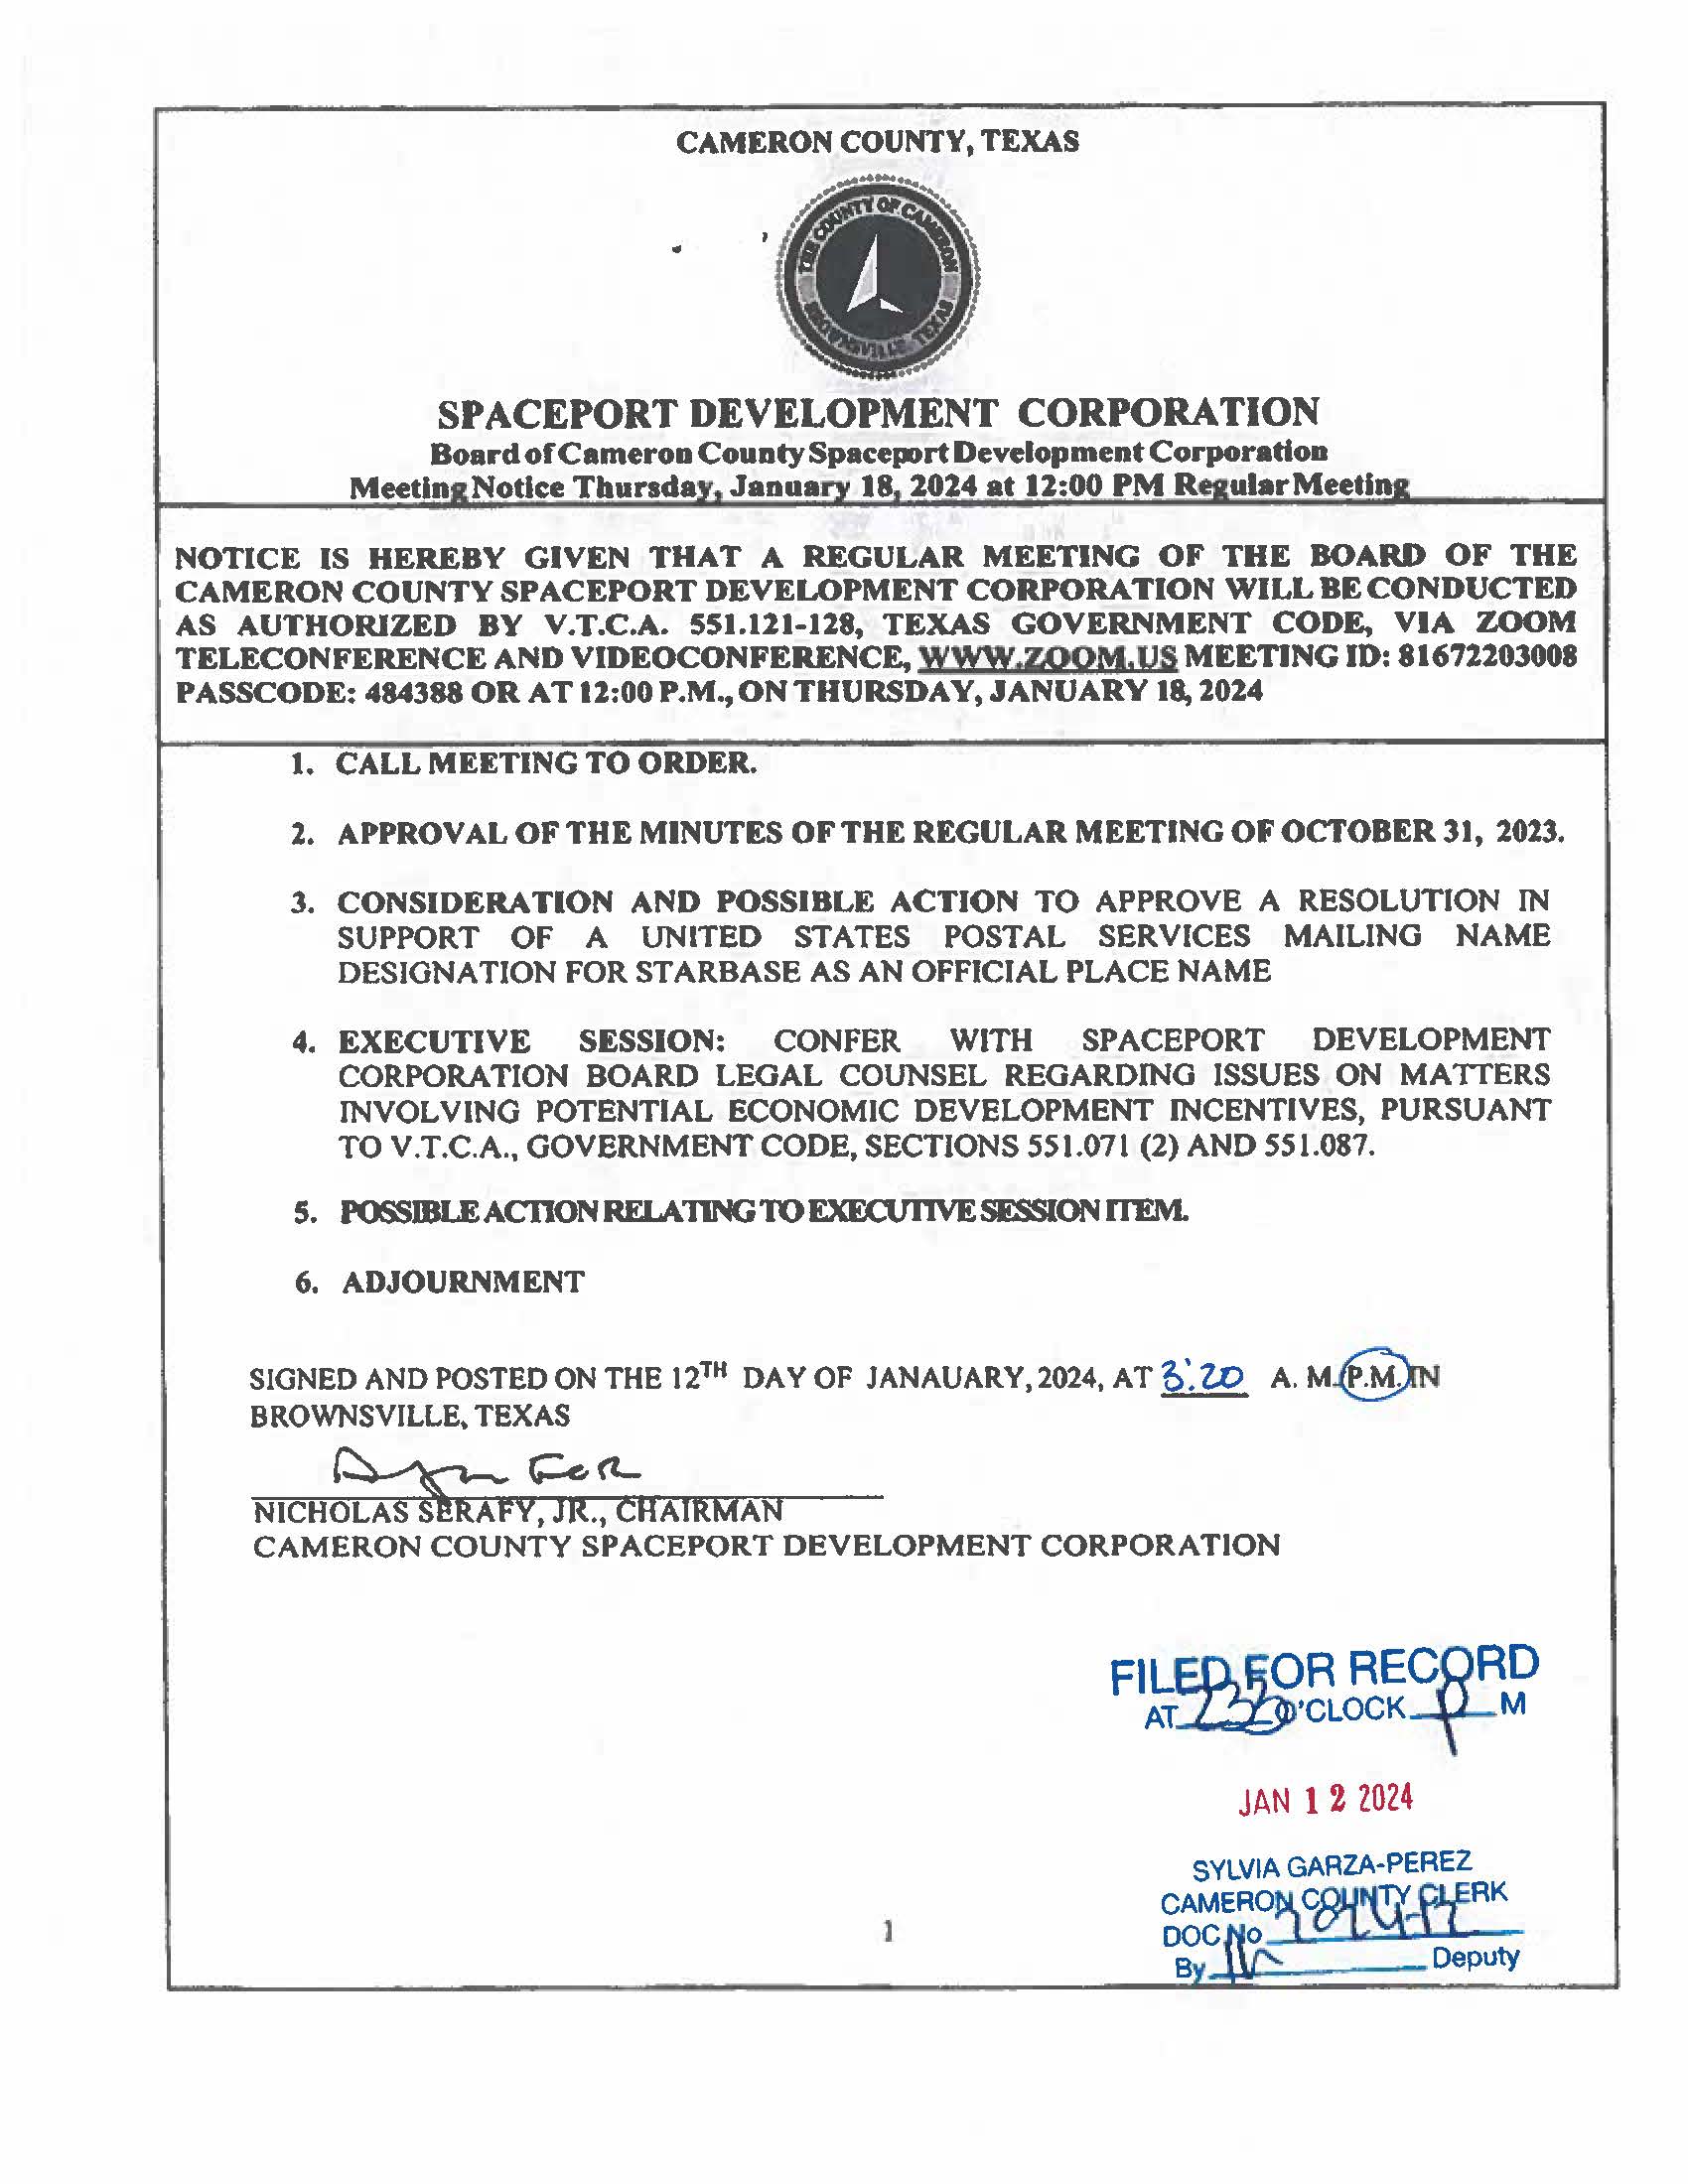 CAMERON COUNTY SPACEPORT DEVELOPMENT CORPORATION AGENDA JANUARY 18 2024